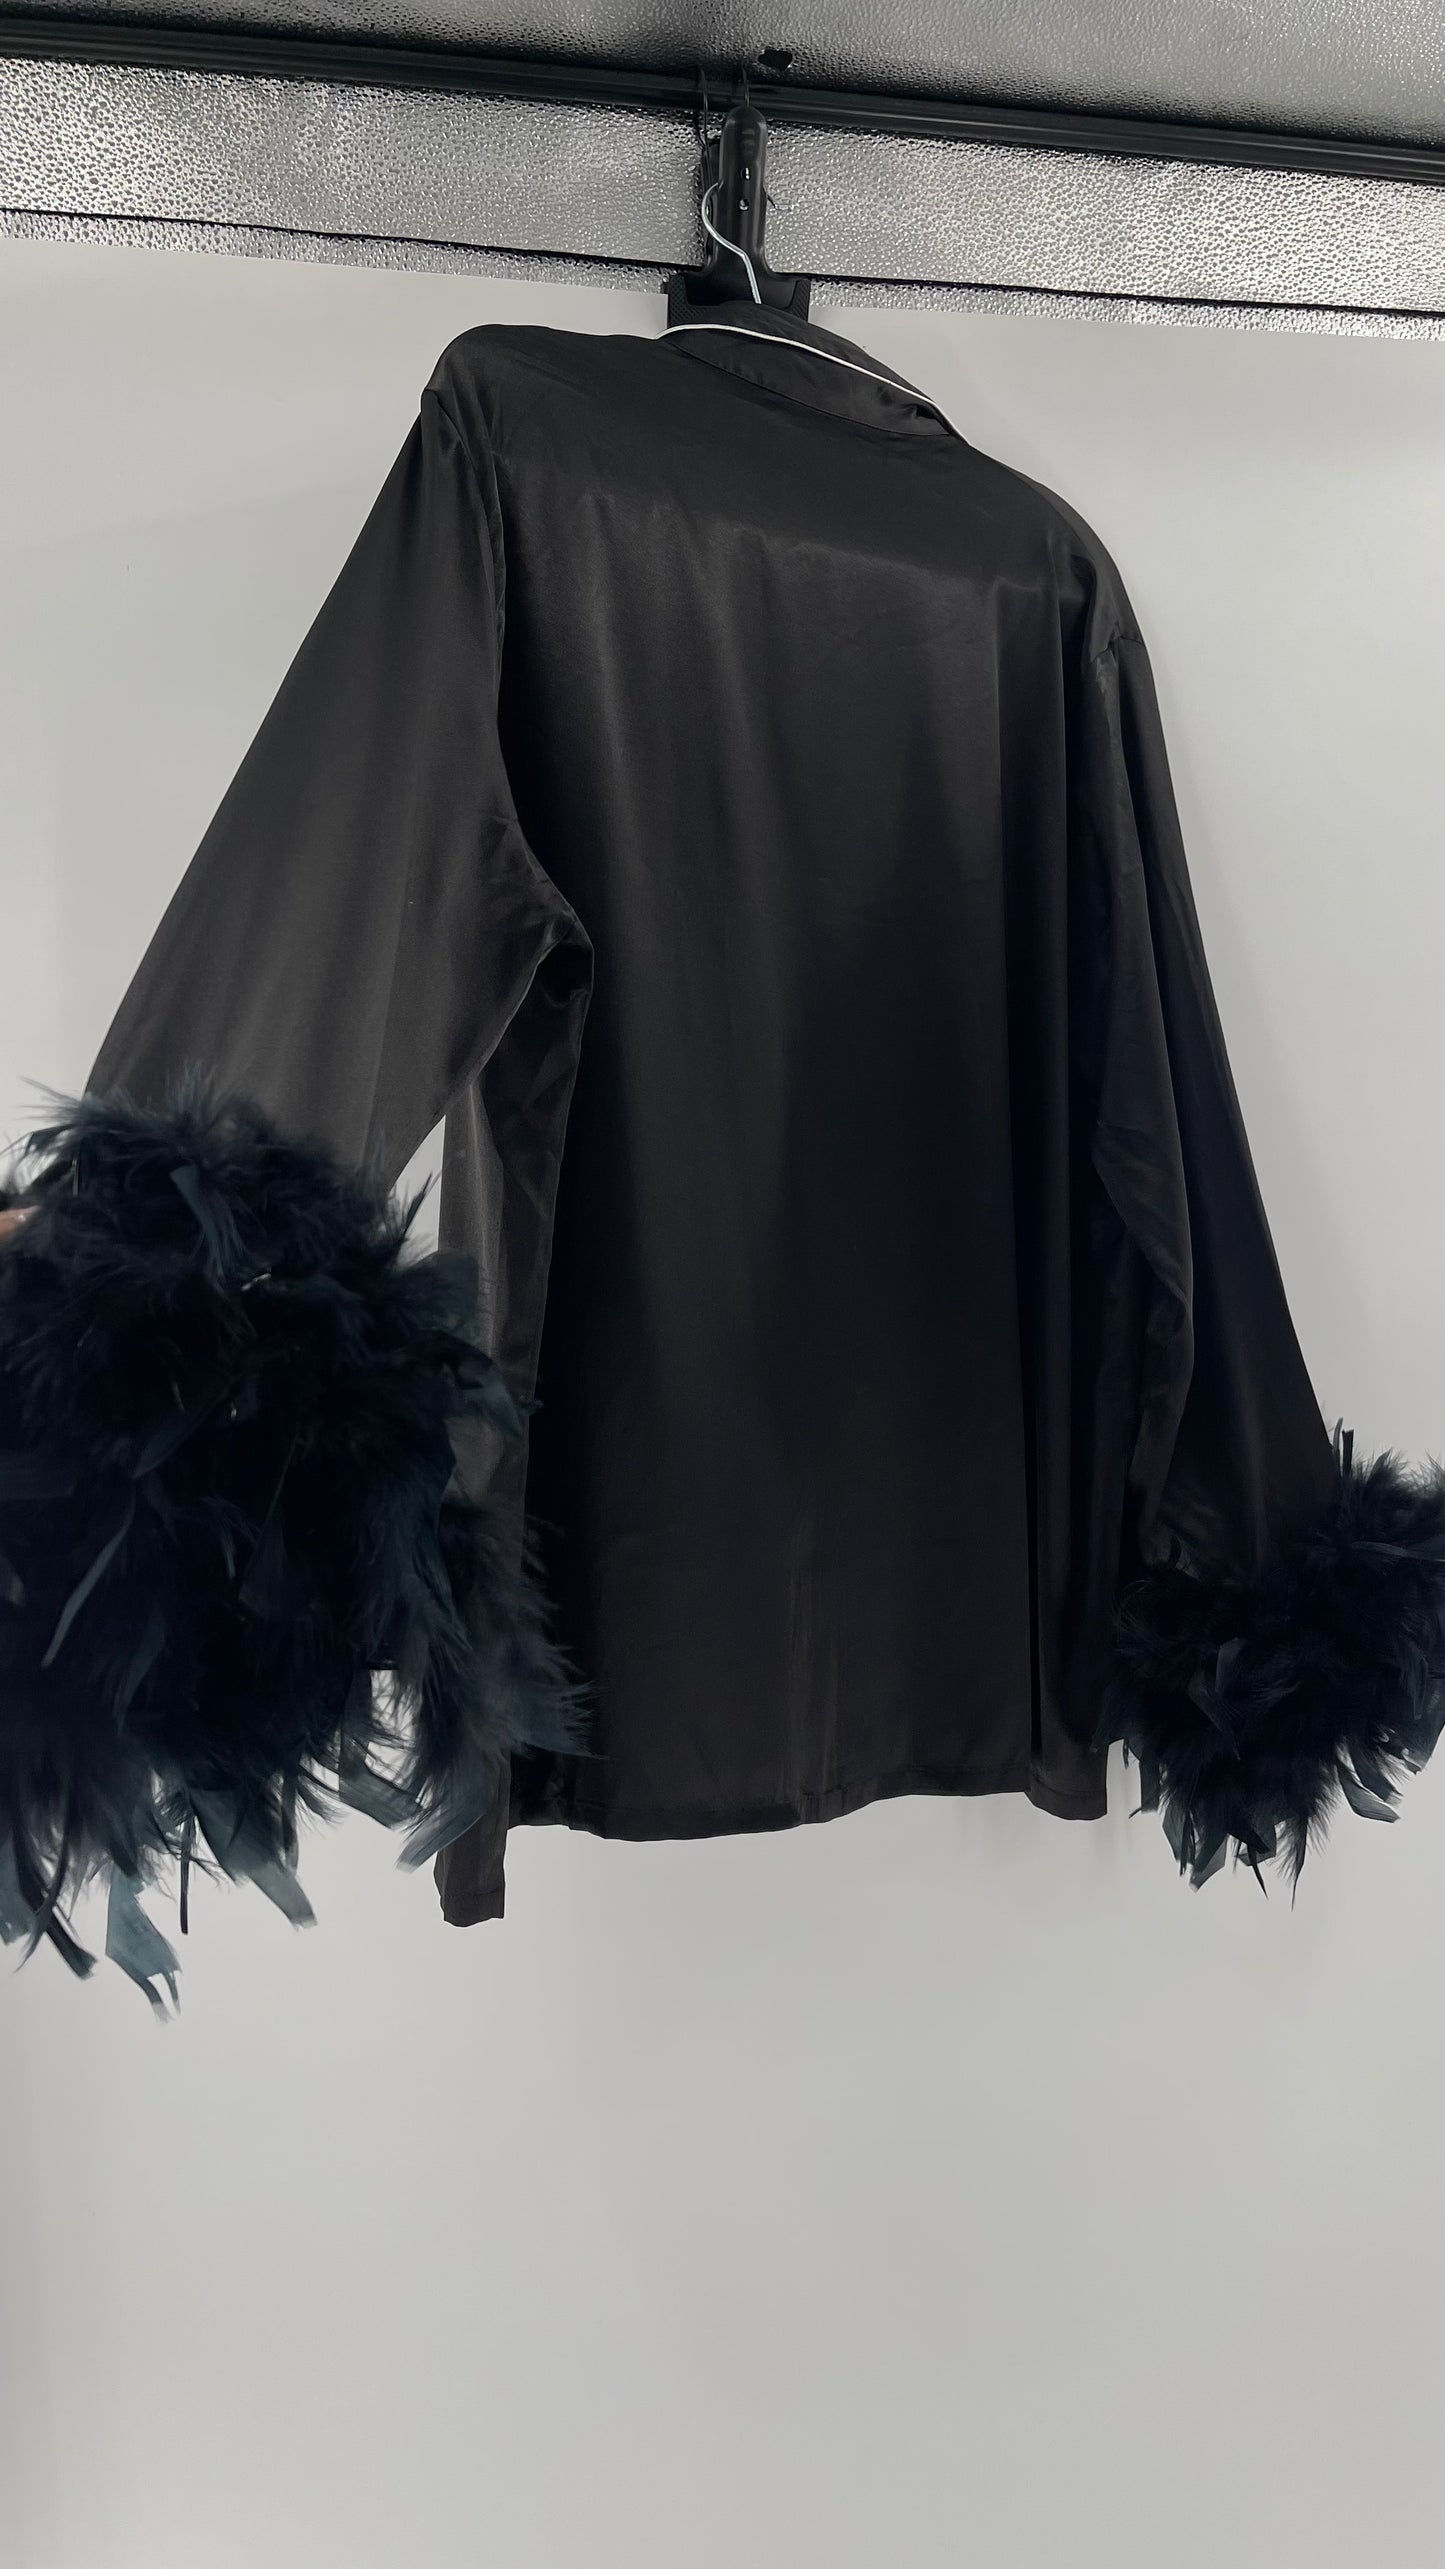 Lonxu Black Satin Pijama Top with Ostrich Feather Cuffs (XXL)